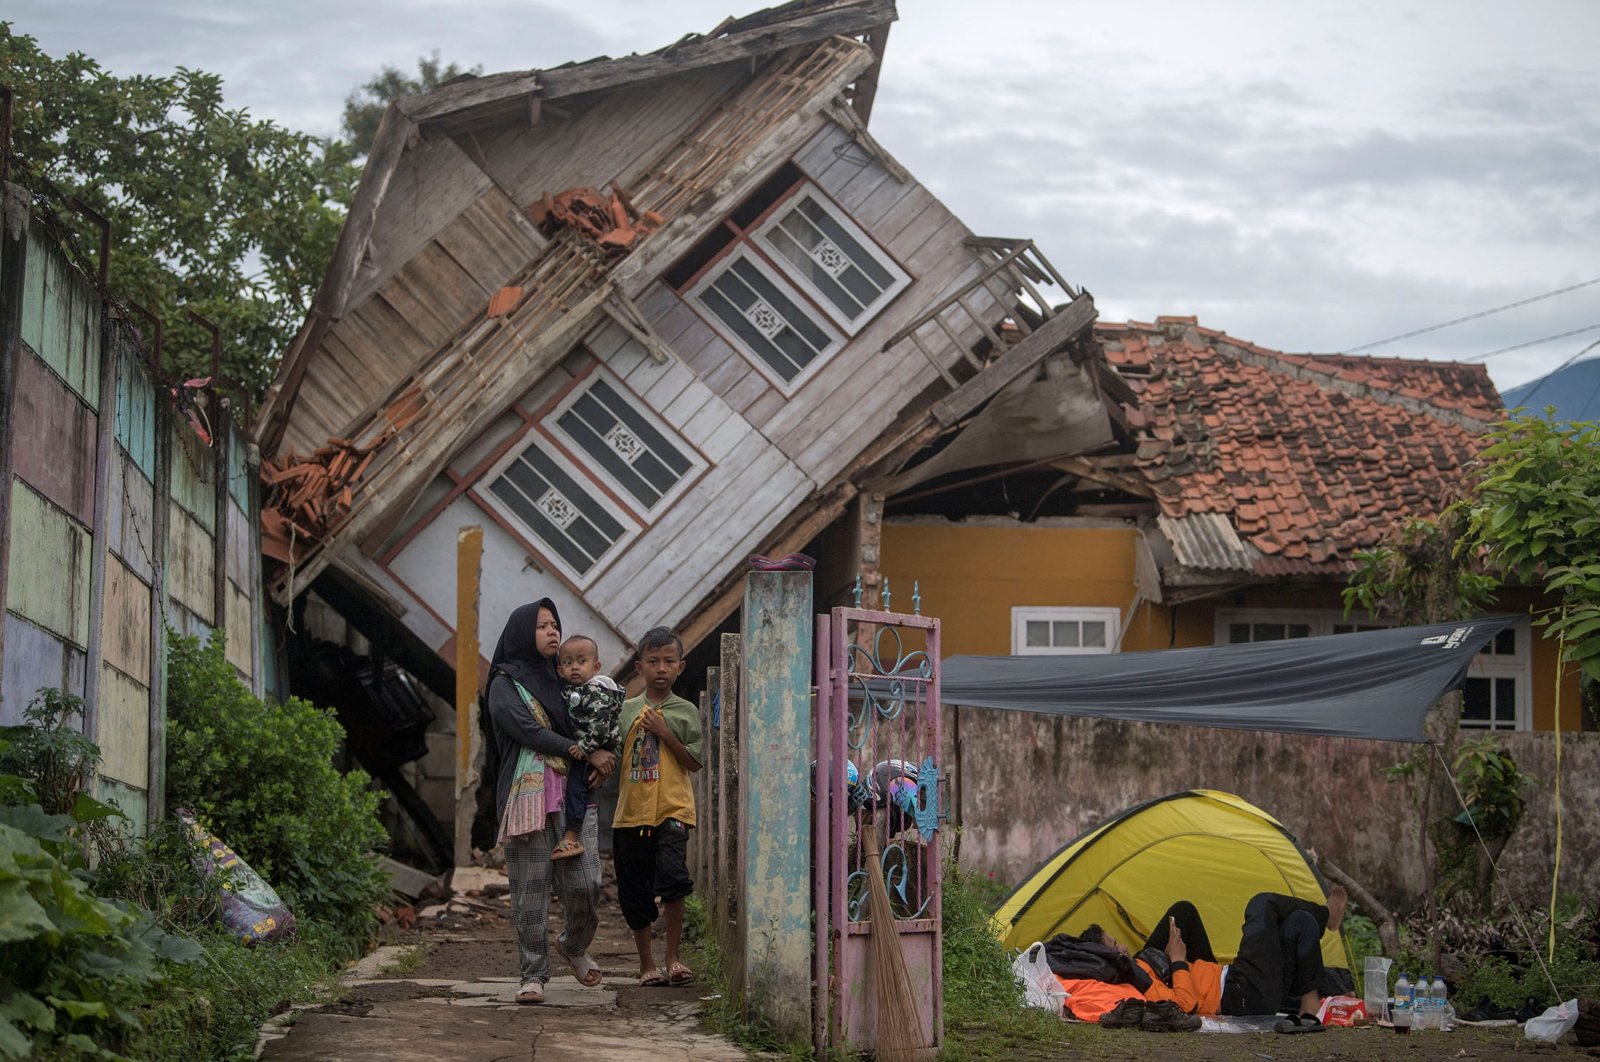 Gempa bermagnitudo 6,4 melanda pulau Jawa di Indonesia, tidak ada tsunami